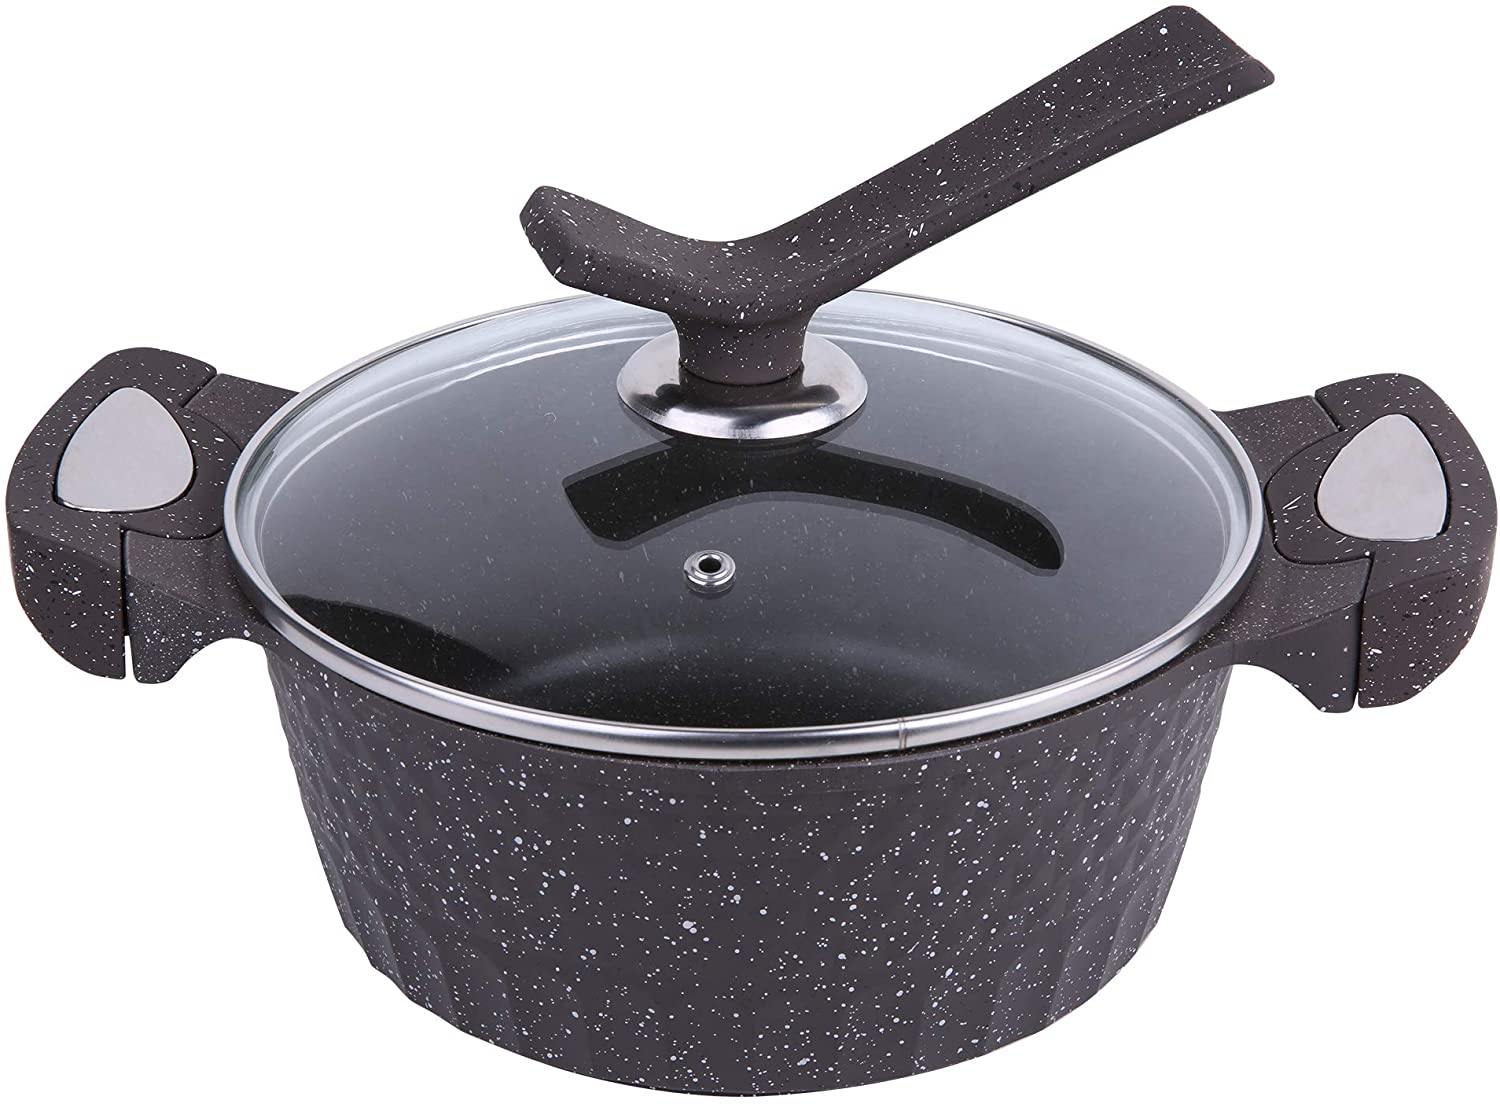 Stainless Steel Pots and Pans Sets, Classic Cookware set, 8pcs - Bosonshop